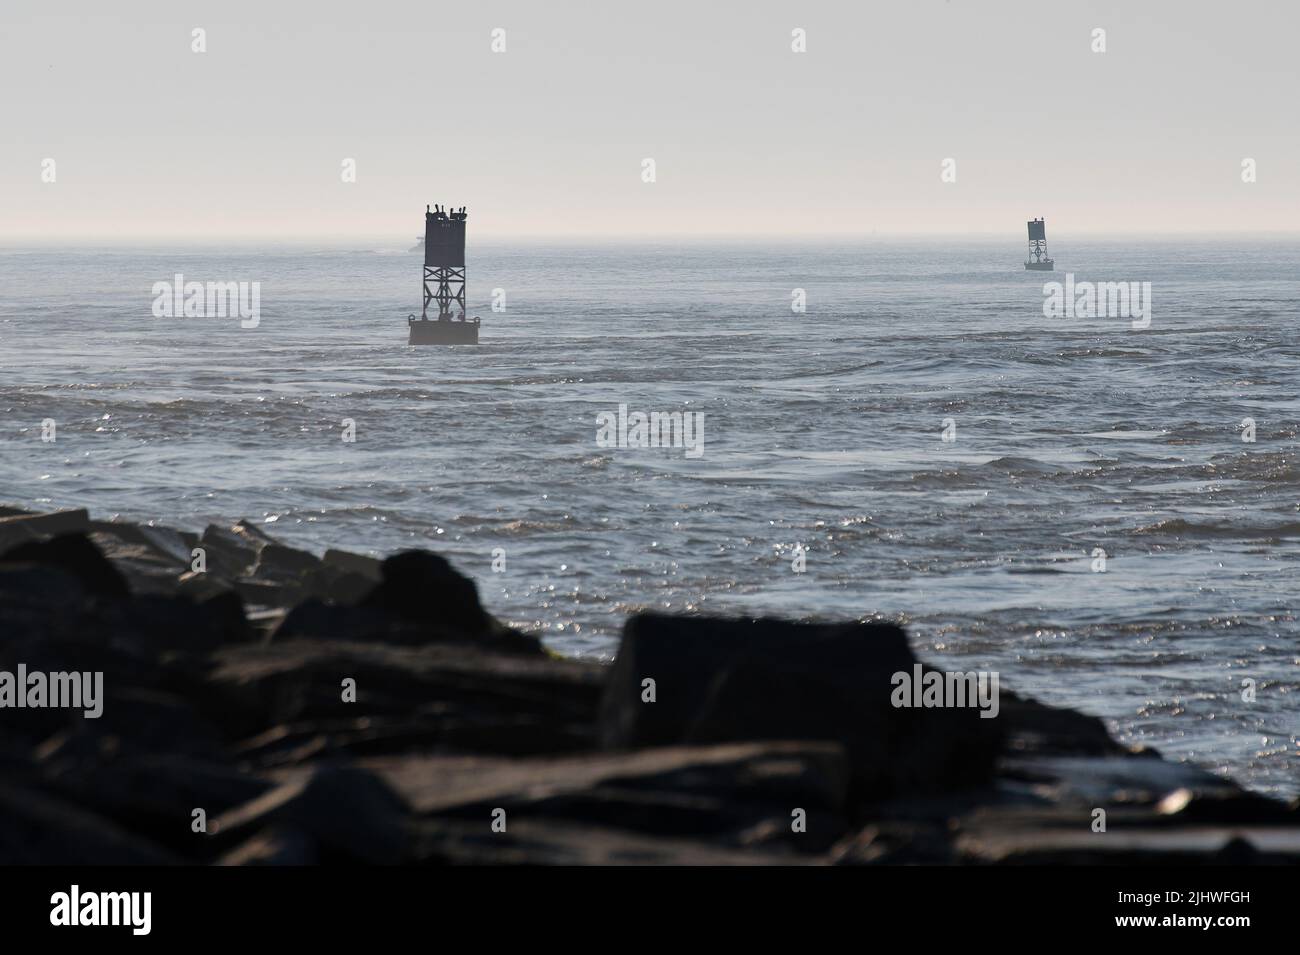 A set of channel buoys mark an inlet on a sunny, misty morning along the Atlantic coastline. Stock Photo